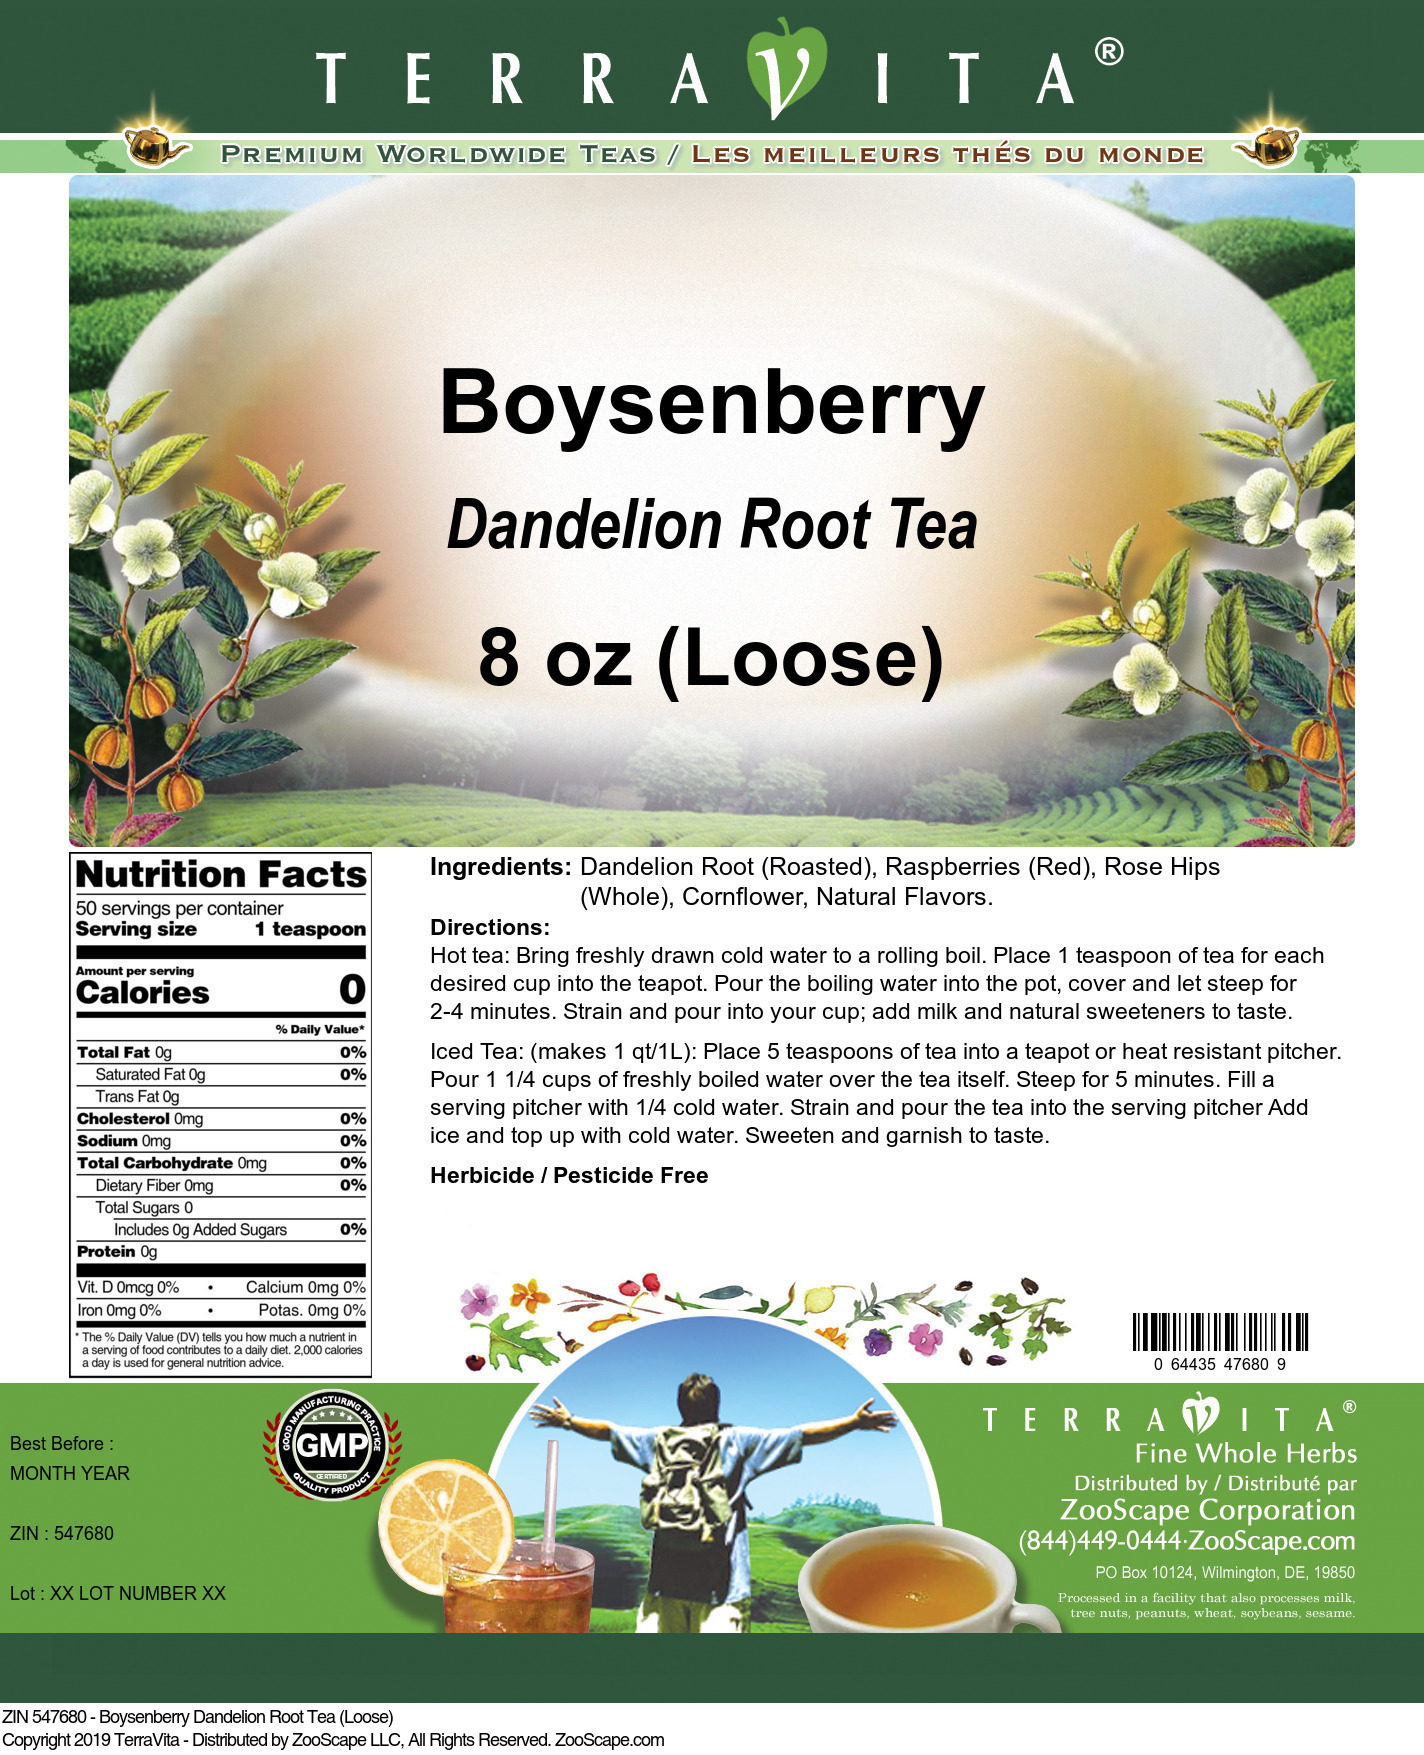 Boysenberry Dandelion Root Tea (Loose) - Label